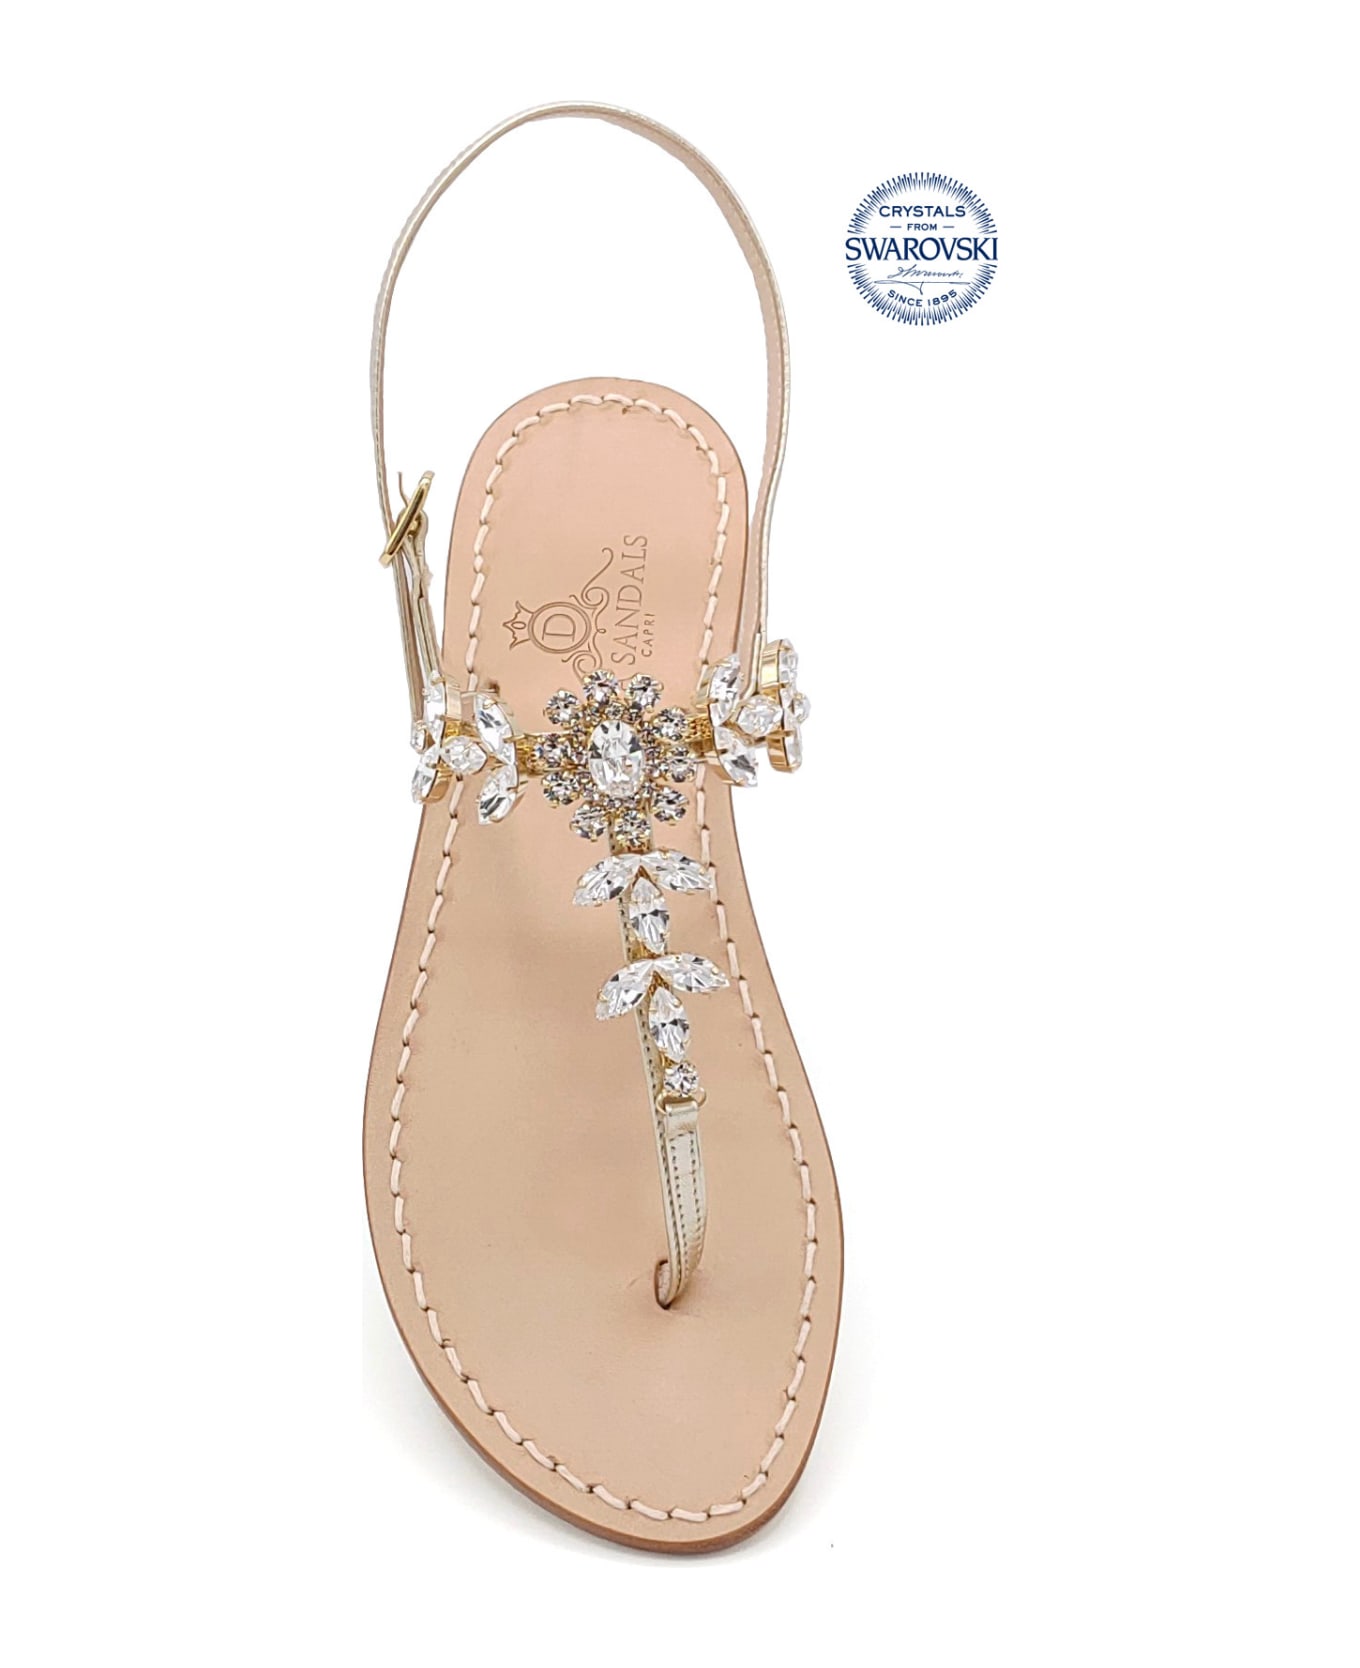 Dea Sandals Marina Grande Flip Flops Thong Sandals - gold, crystal